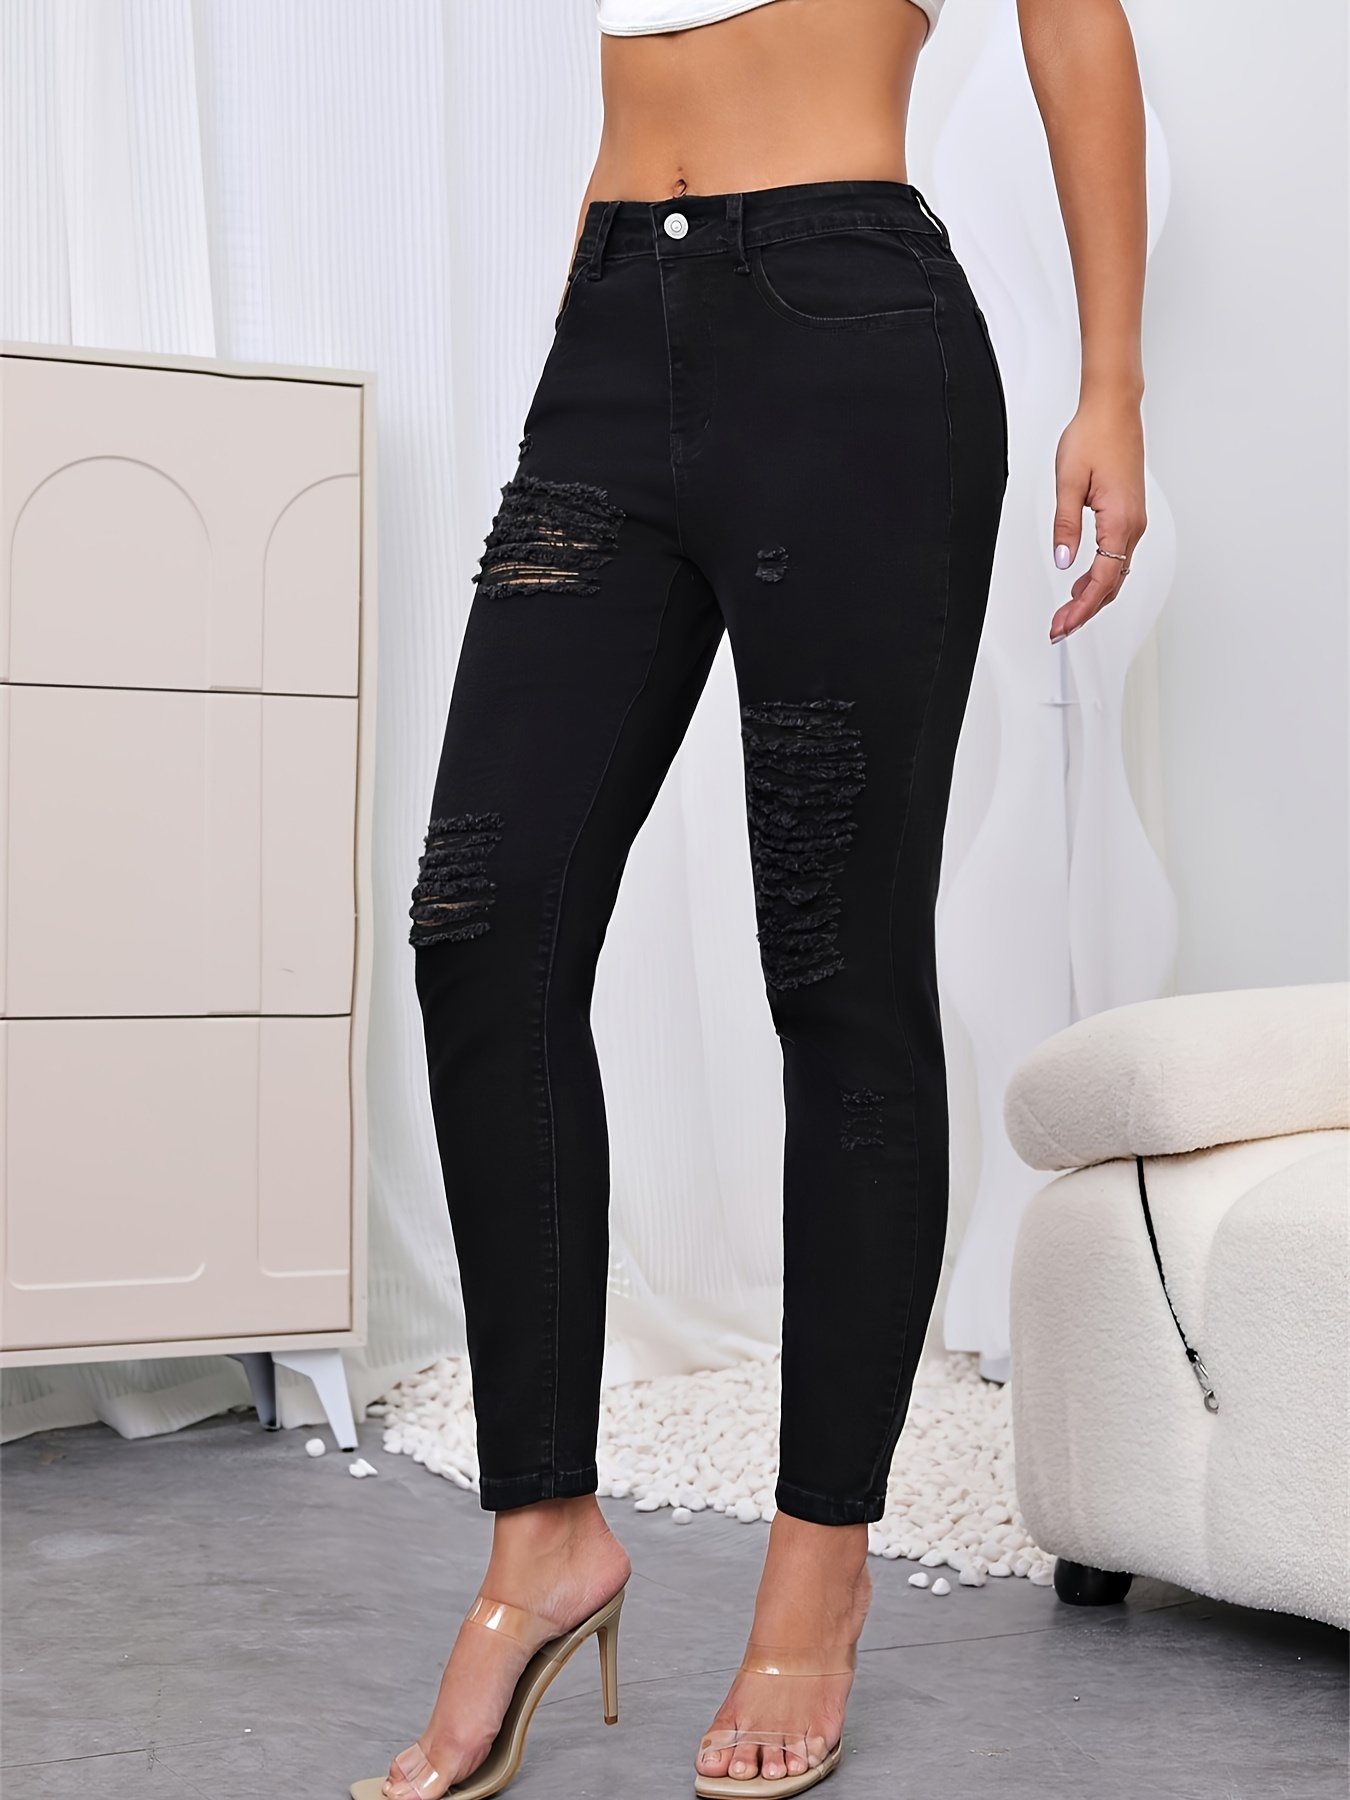 Black Ripped Holes Skinny Jeans, Slim Fit * Hem Capris Casual Denim Pants,  Women's Denim Jeans & Clothing